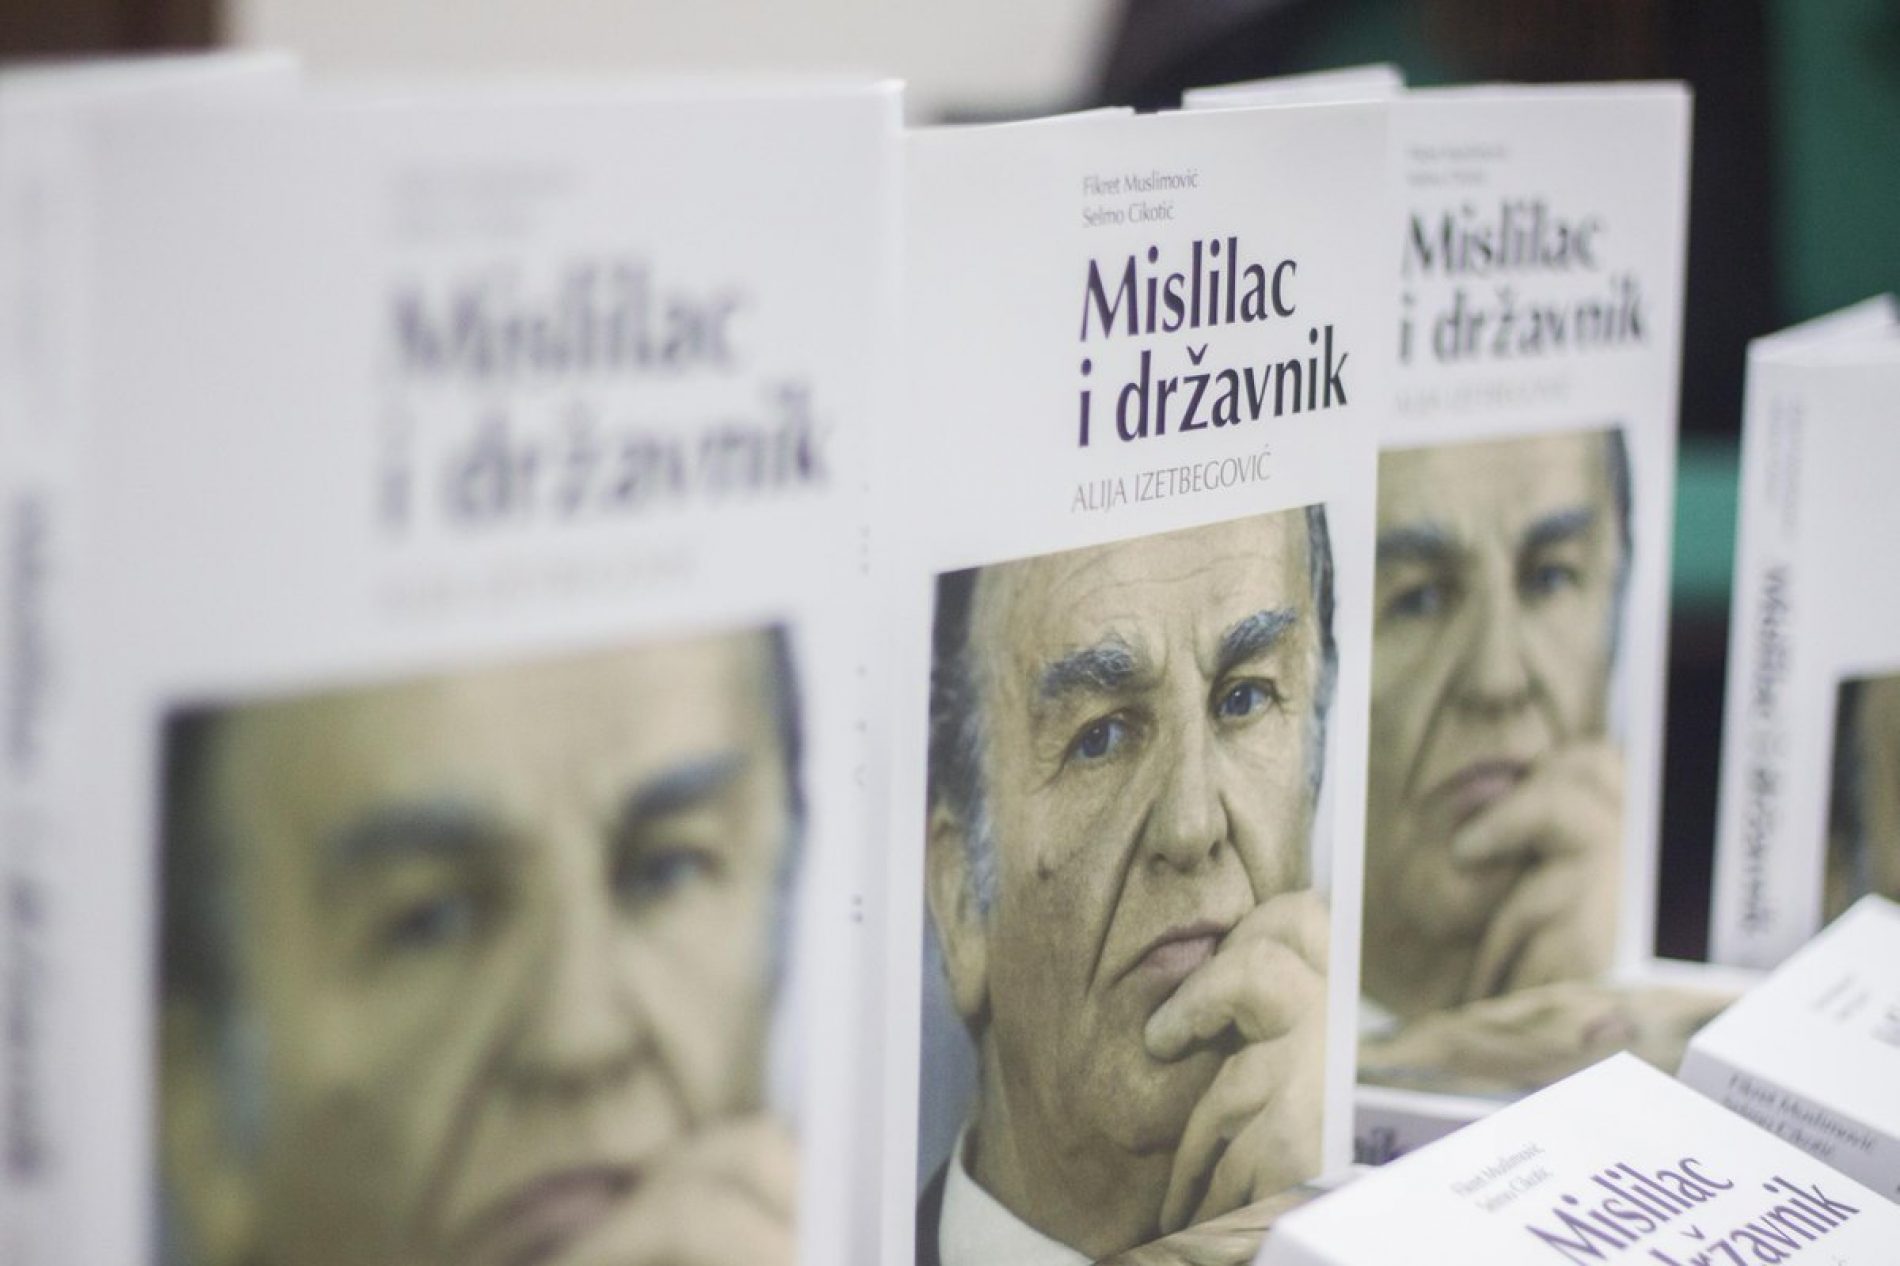 U Zenici promovisana knjiga “Mislilac i državnik Alija Izetbegović”